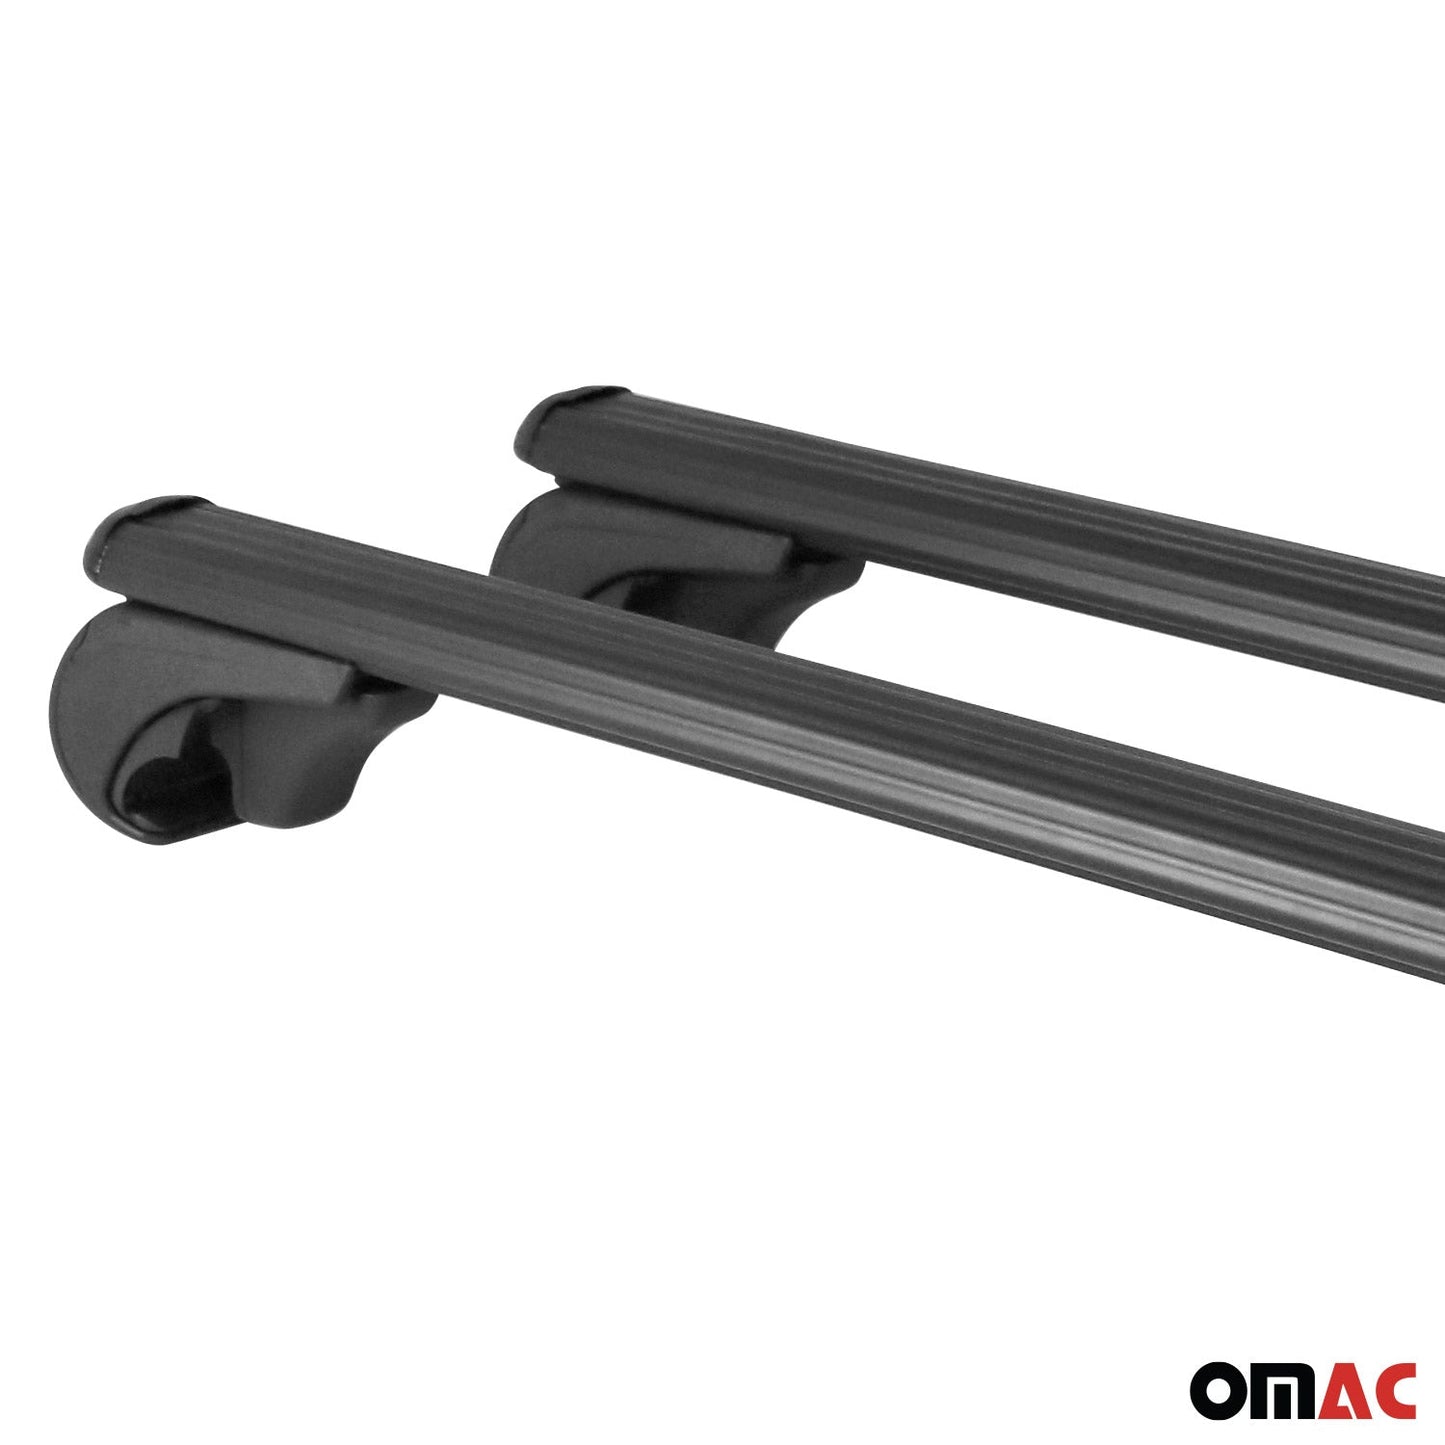 OMAC Lockable Roof Rack Cross Bars Luggage Carrier for Dodge Journey 2009-2020 Black 25289696929LB